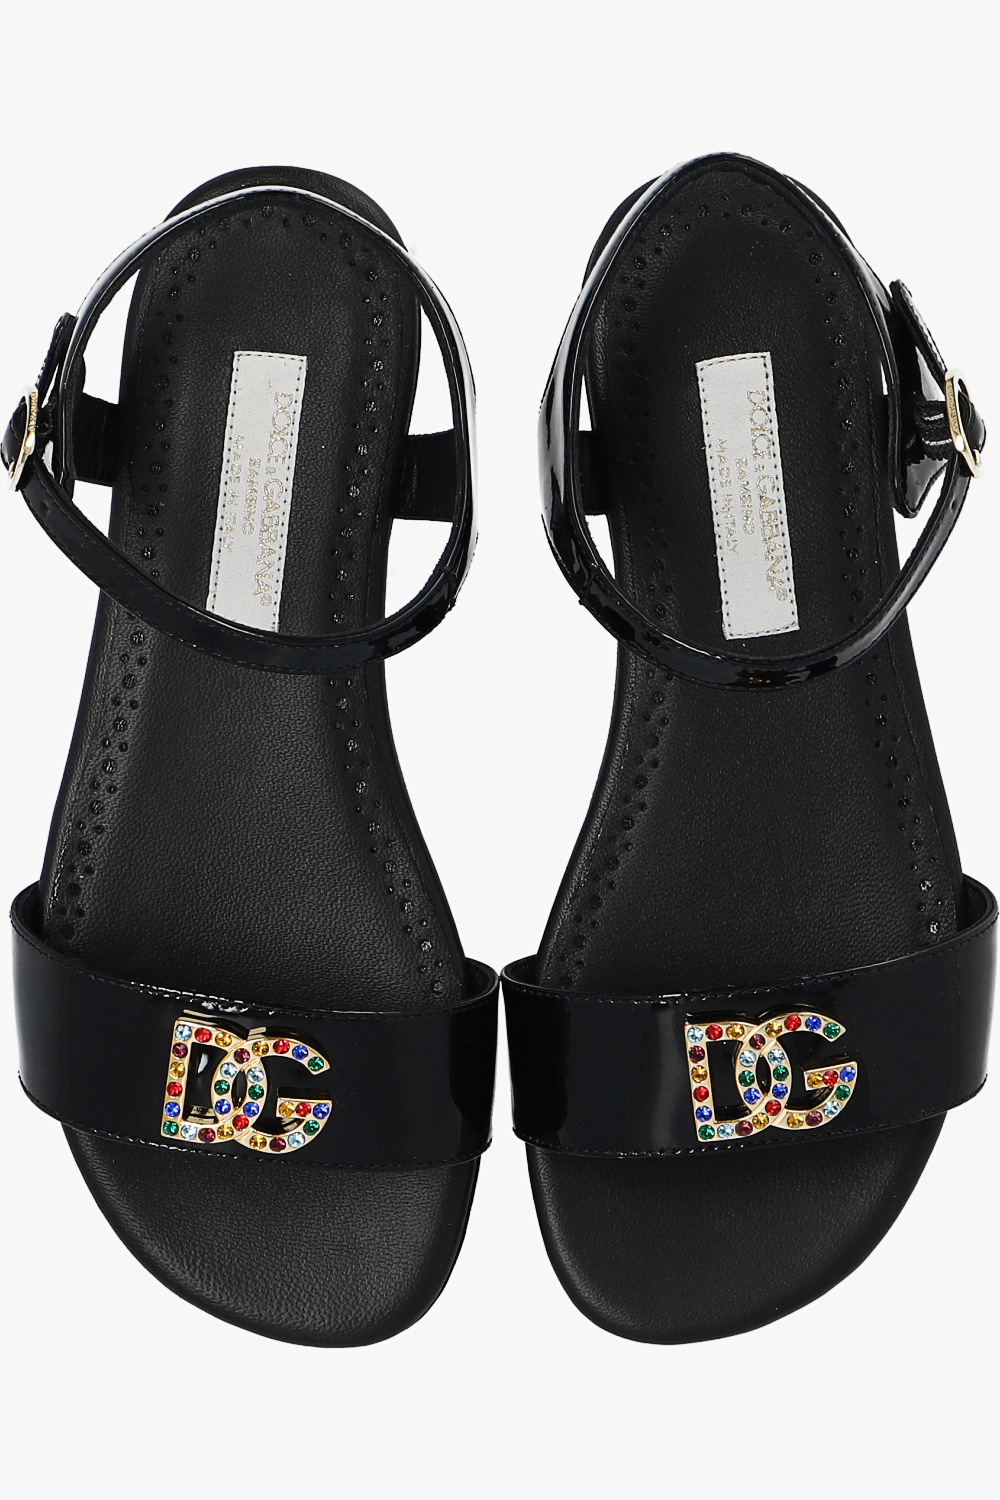 Dolce & Gabbana Kids dolce gabbana block heel knee high boots item